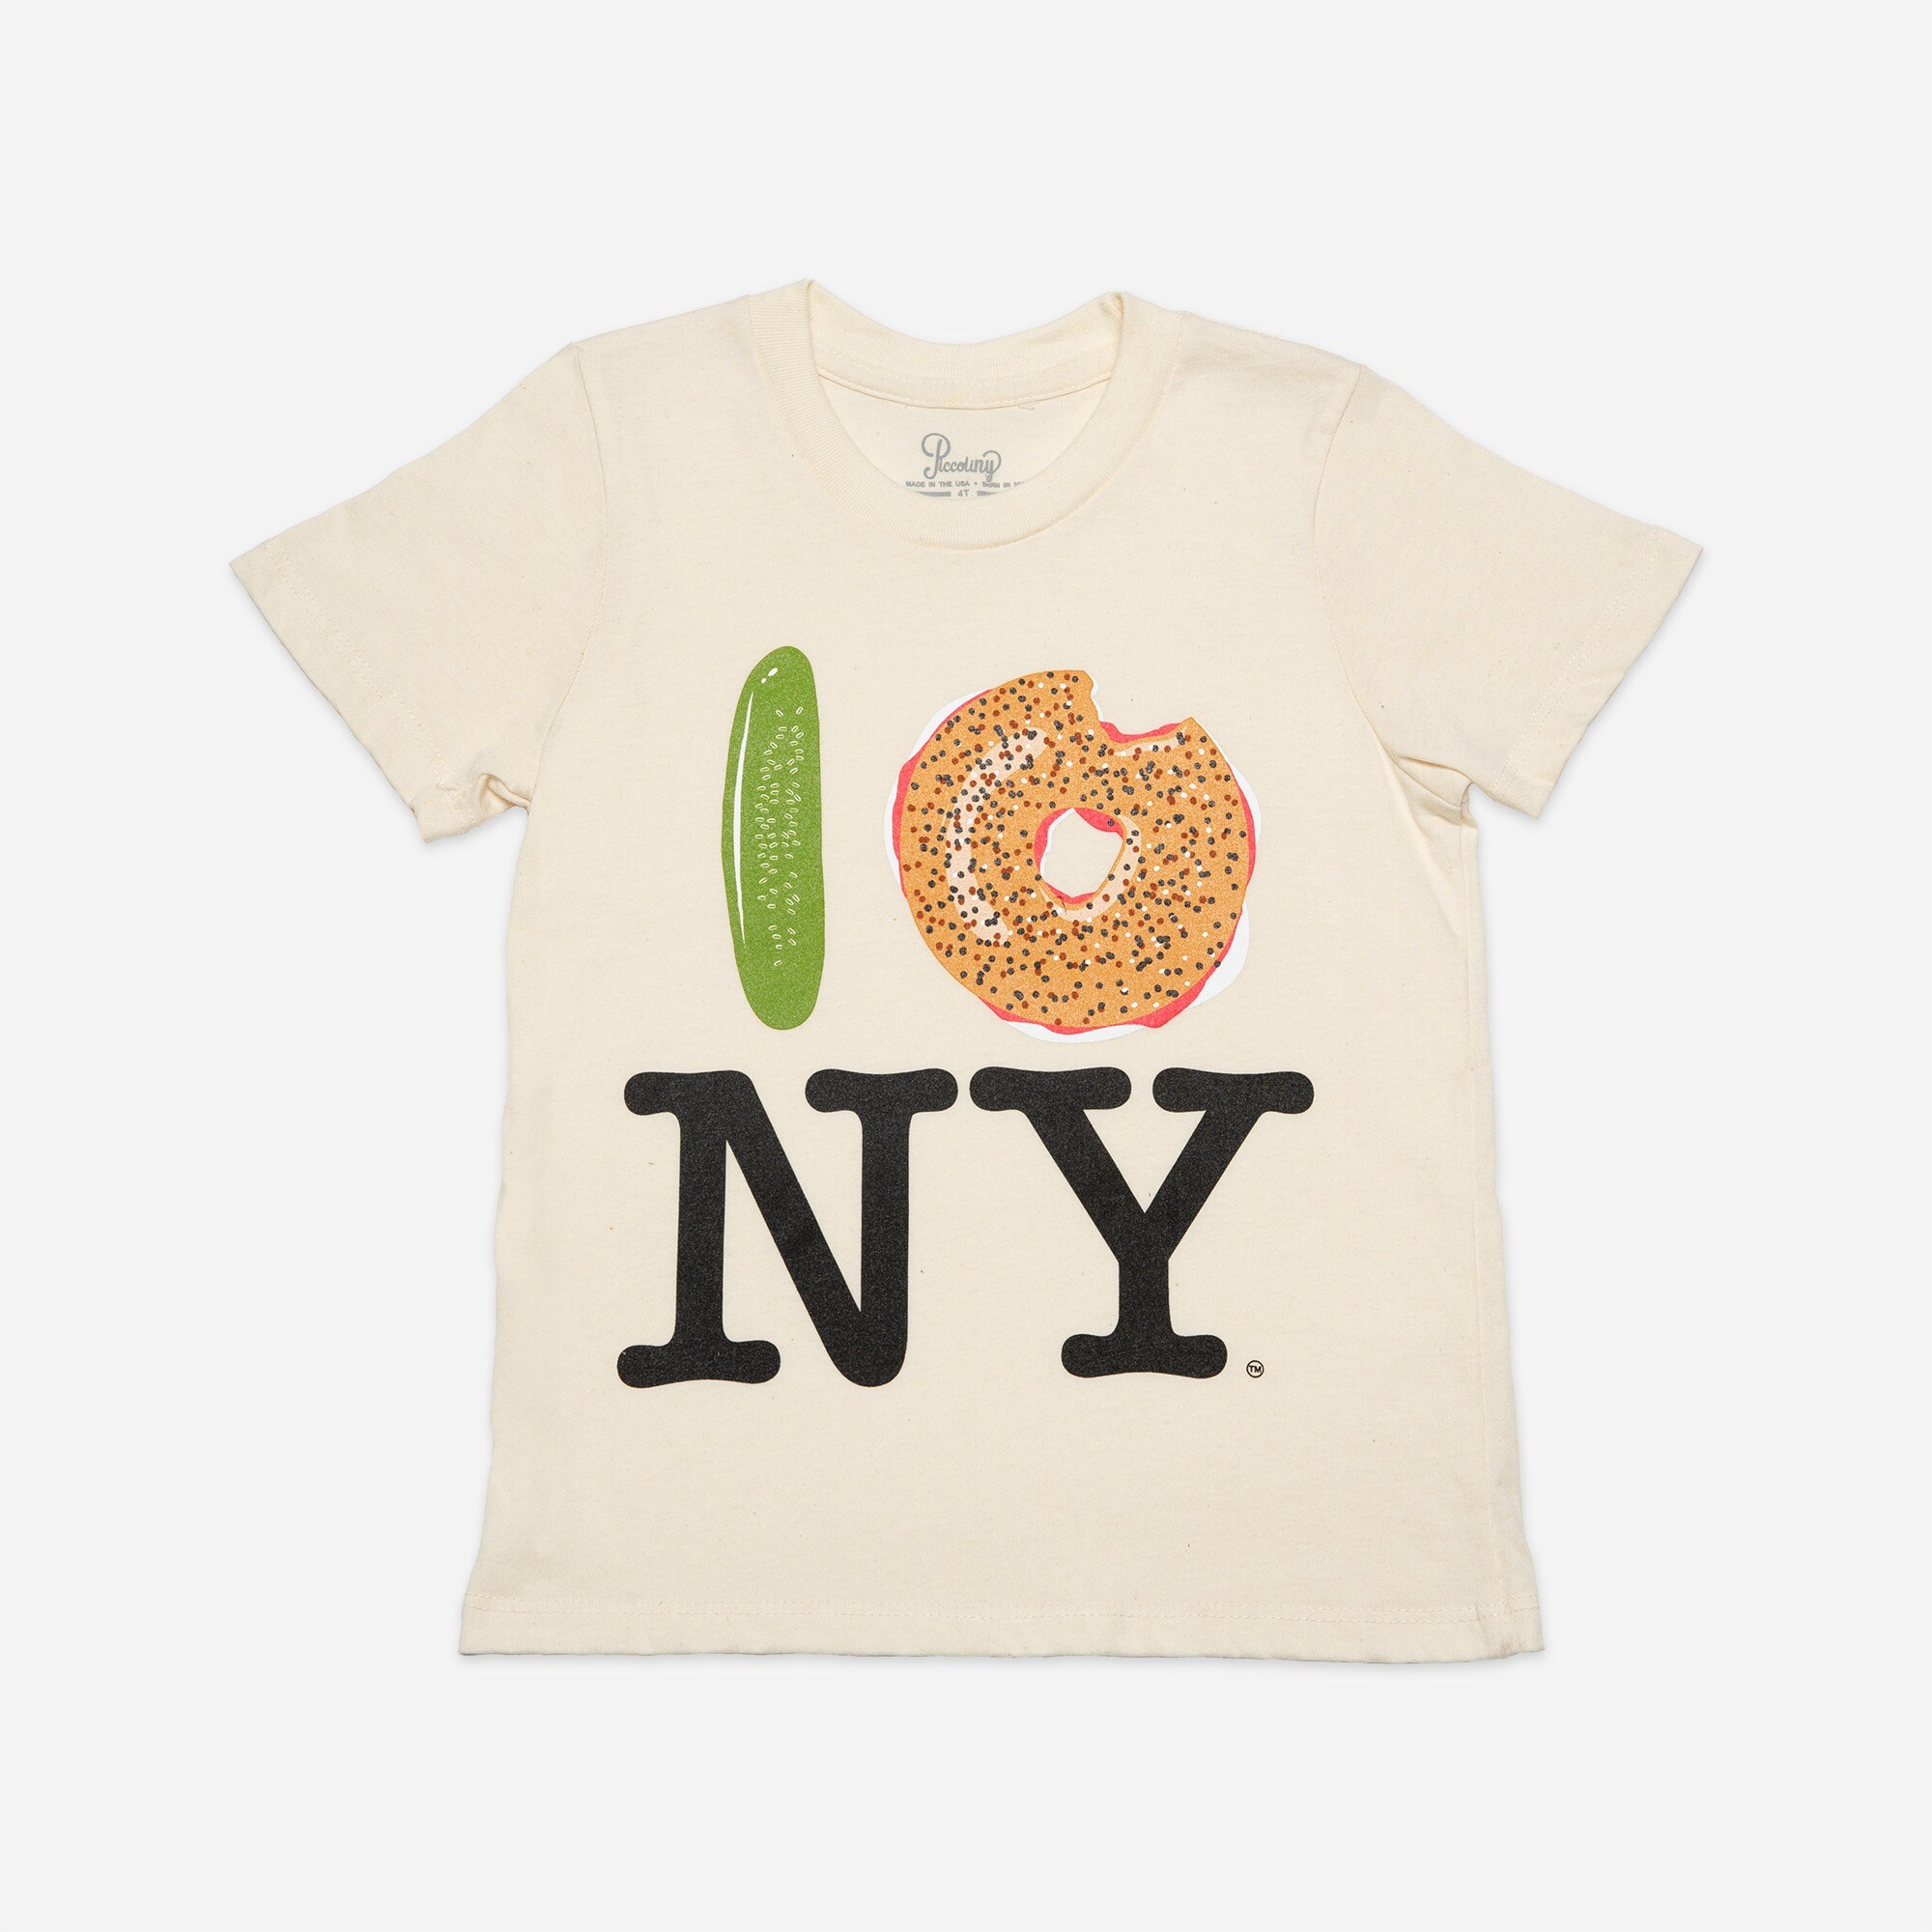  PiccoliNY pickle bagel NY T-shirt